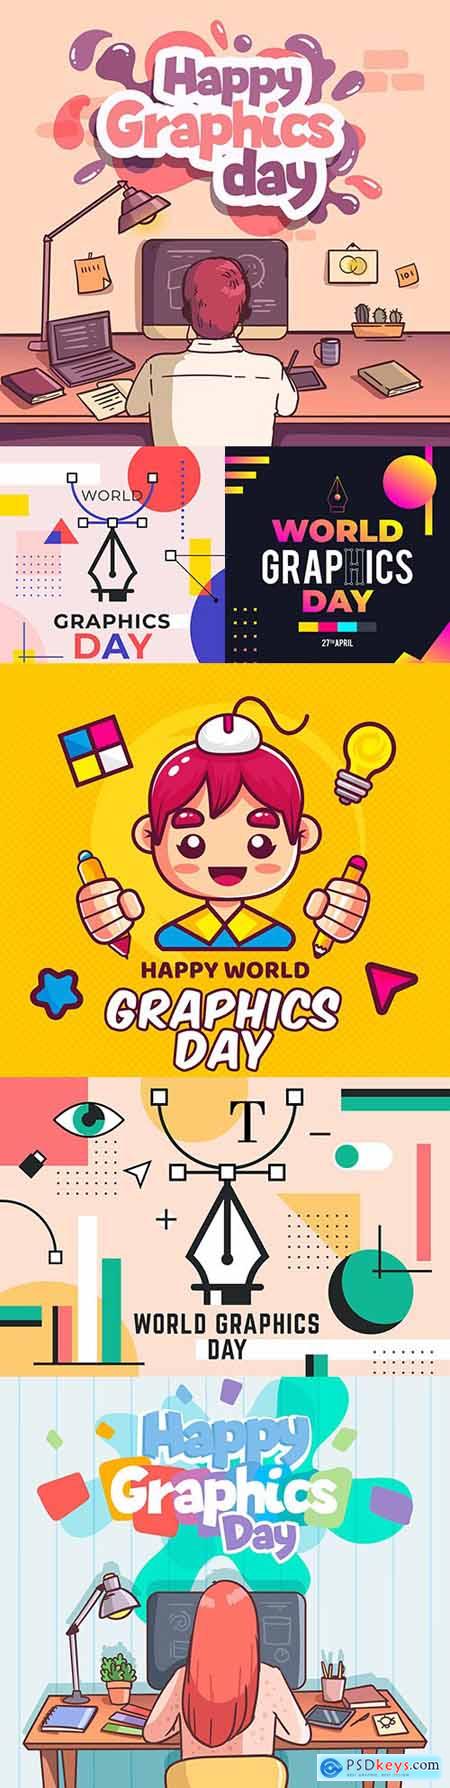 World Graphic day painted illustration flat design